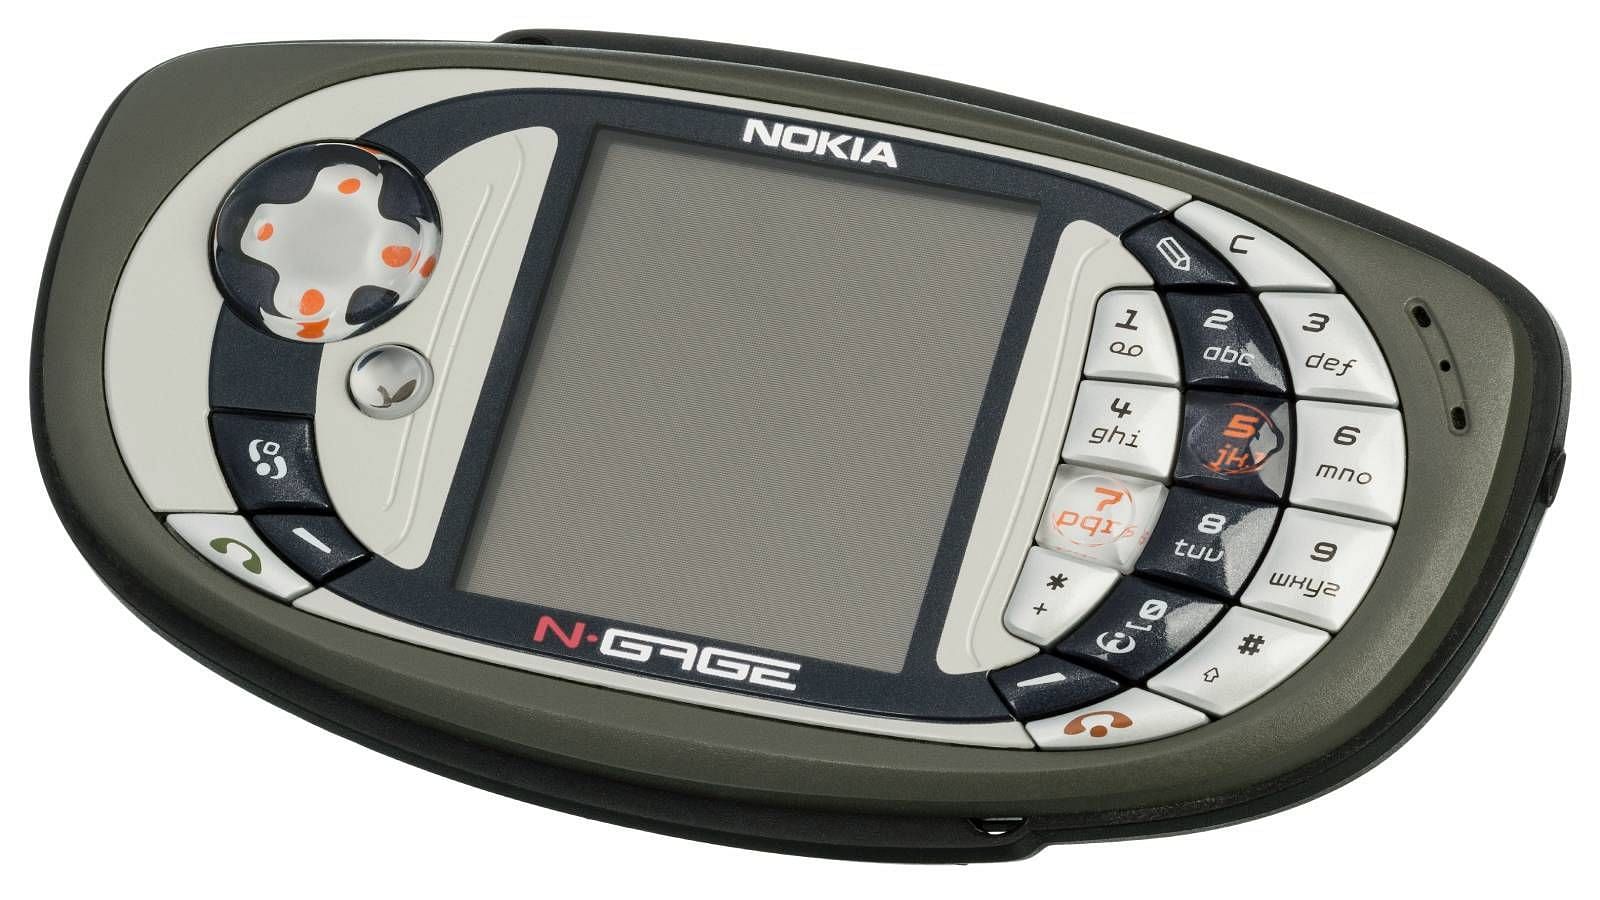 The Nokia N-Gage QD (Image via Wikipedia)